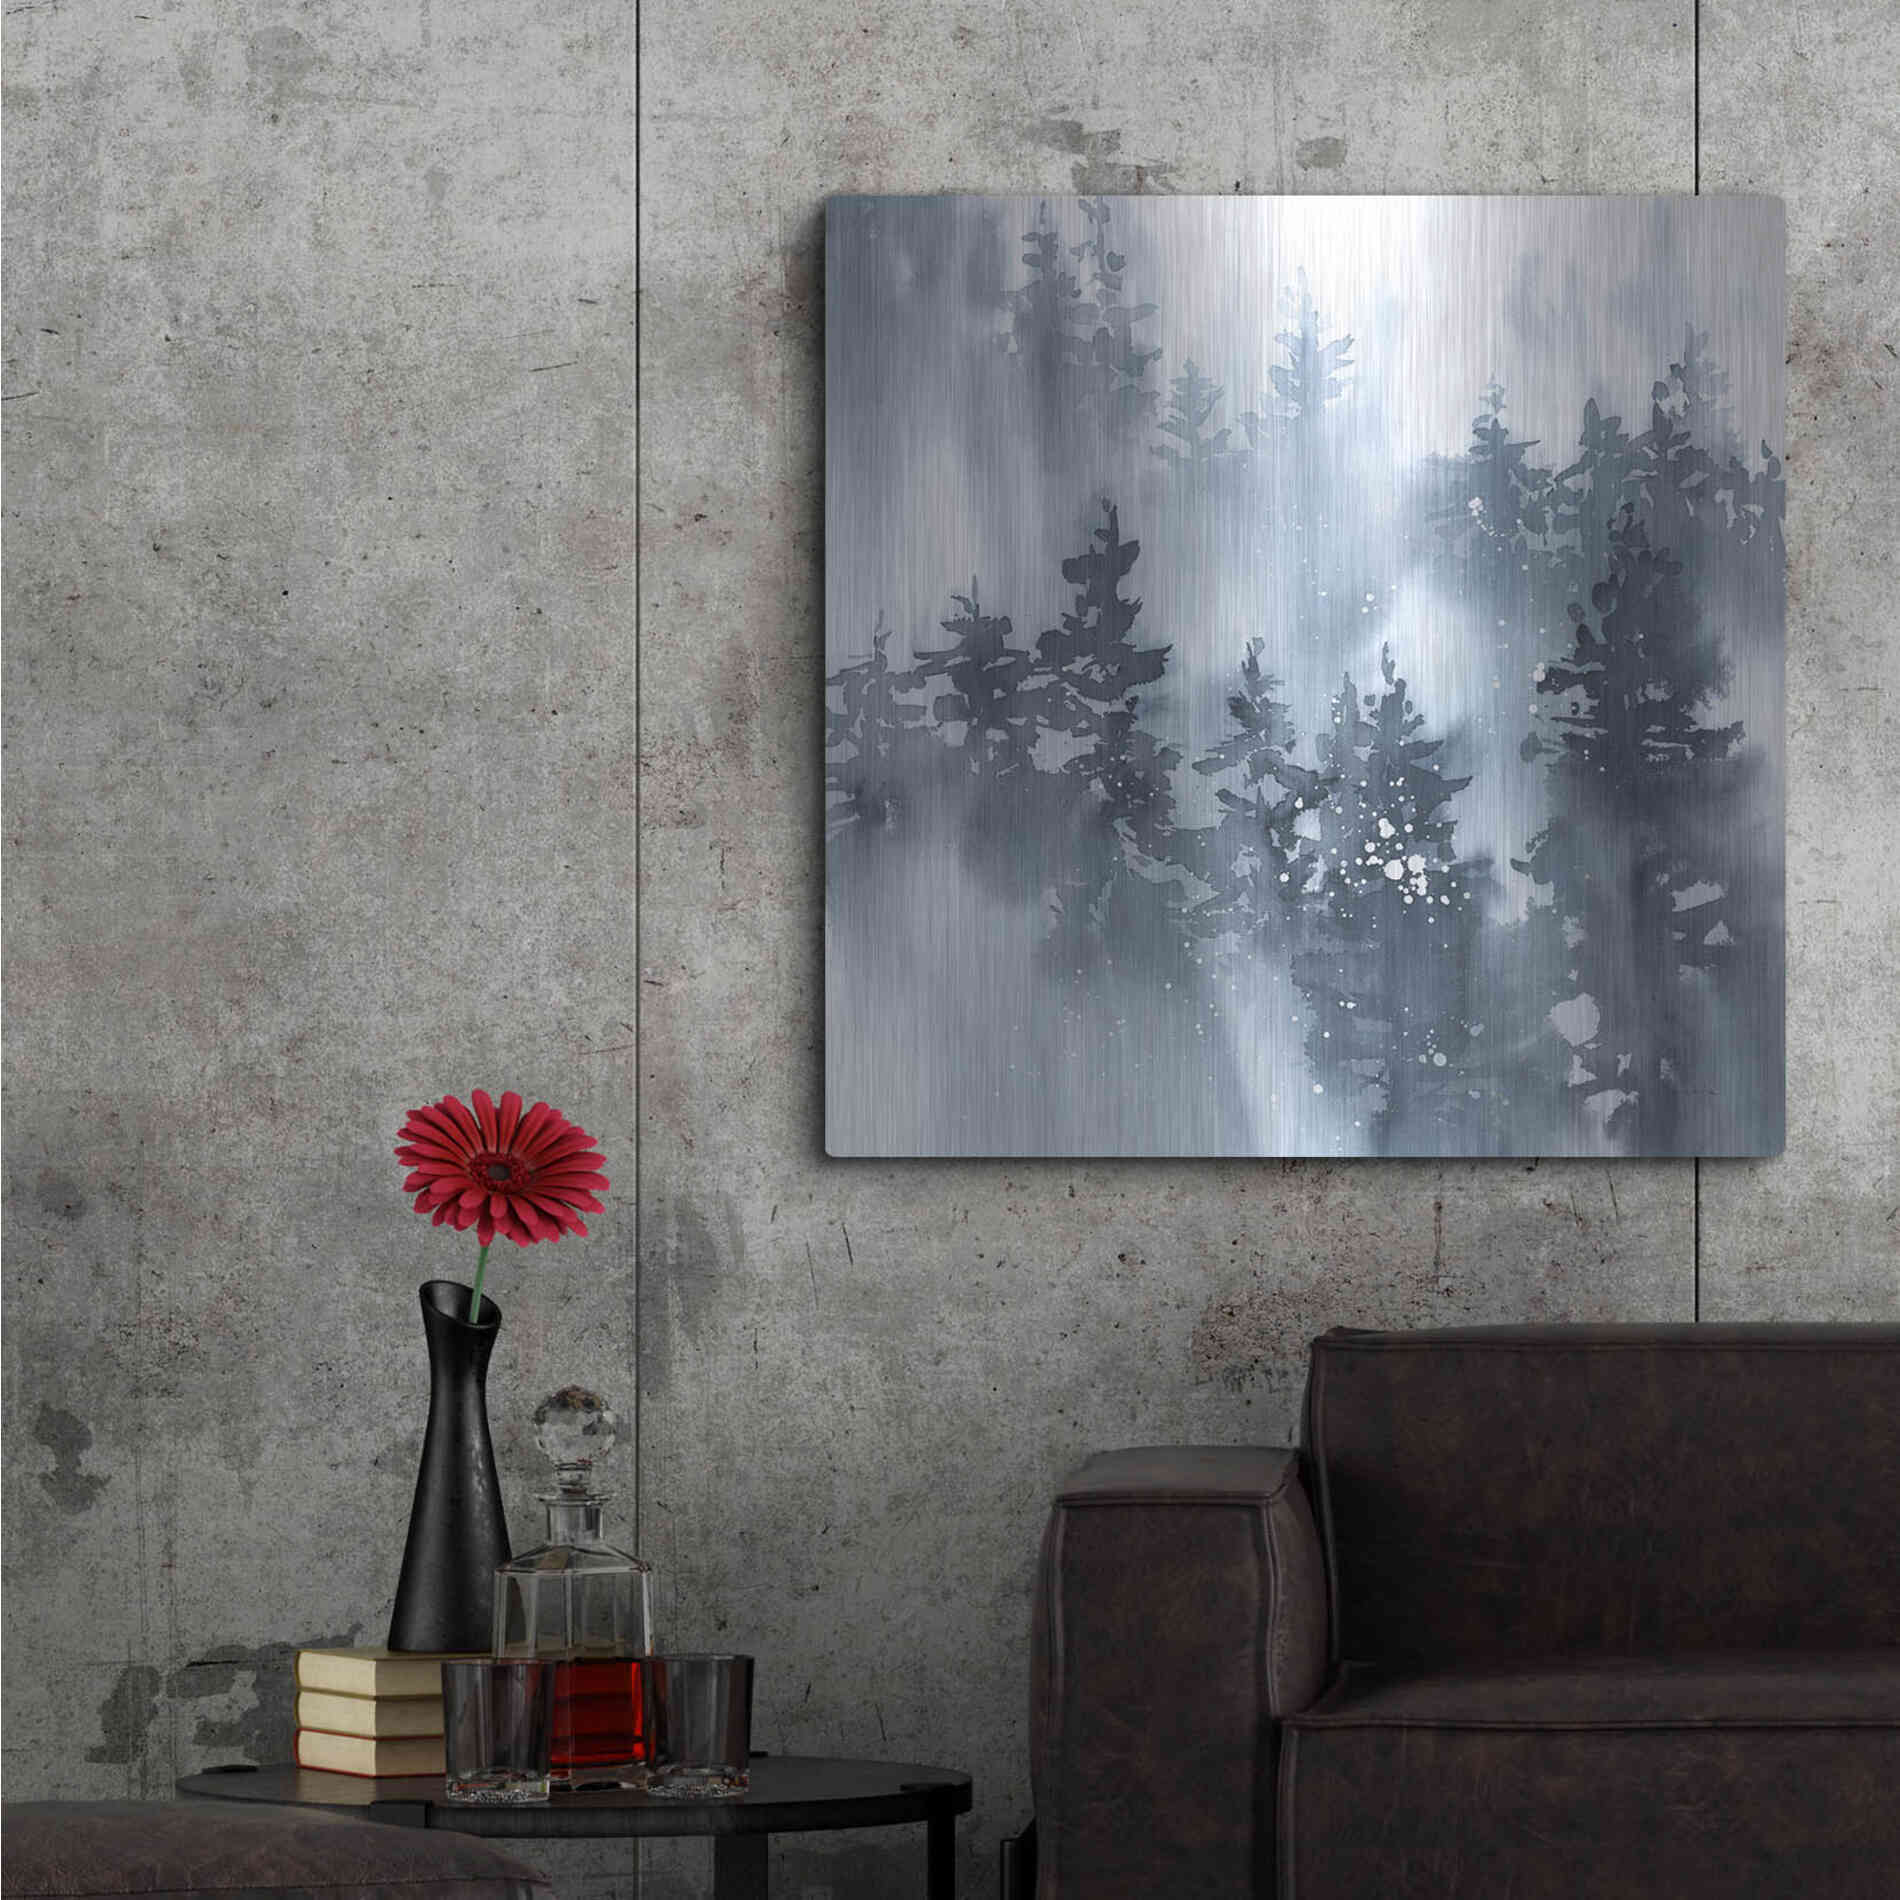 Luxe Metal Art 'Misty Forest I' by Katrina Pete, Metal Wall Art,36x36